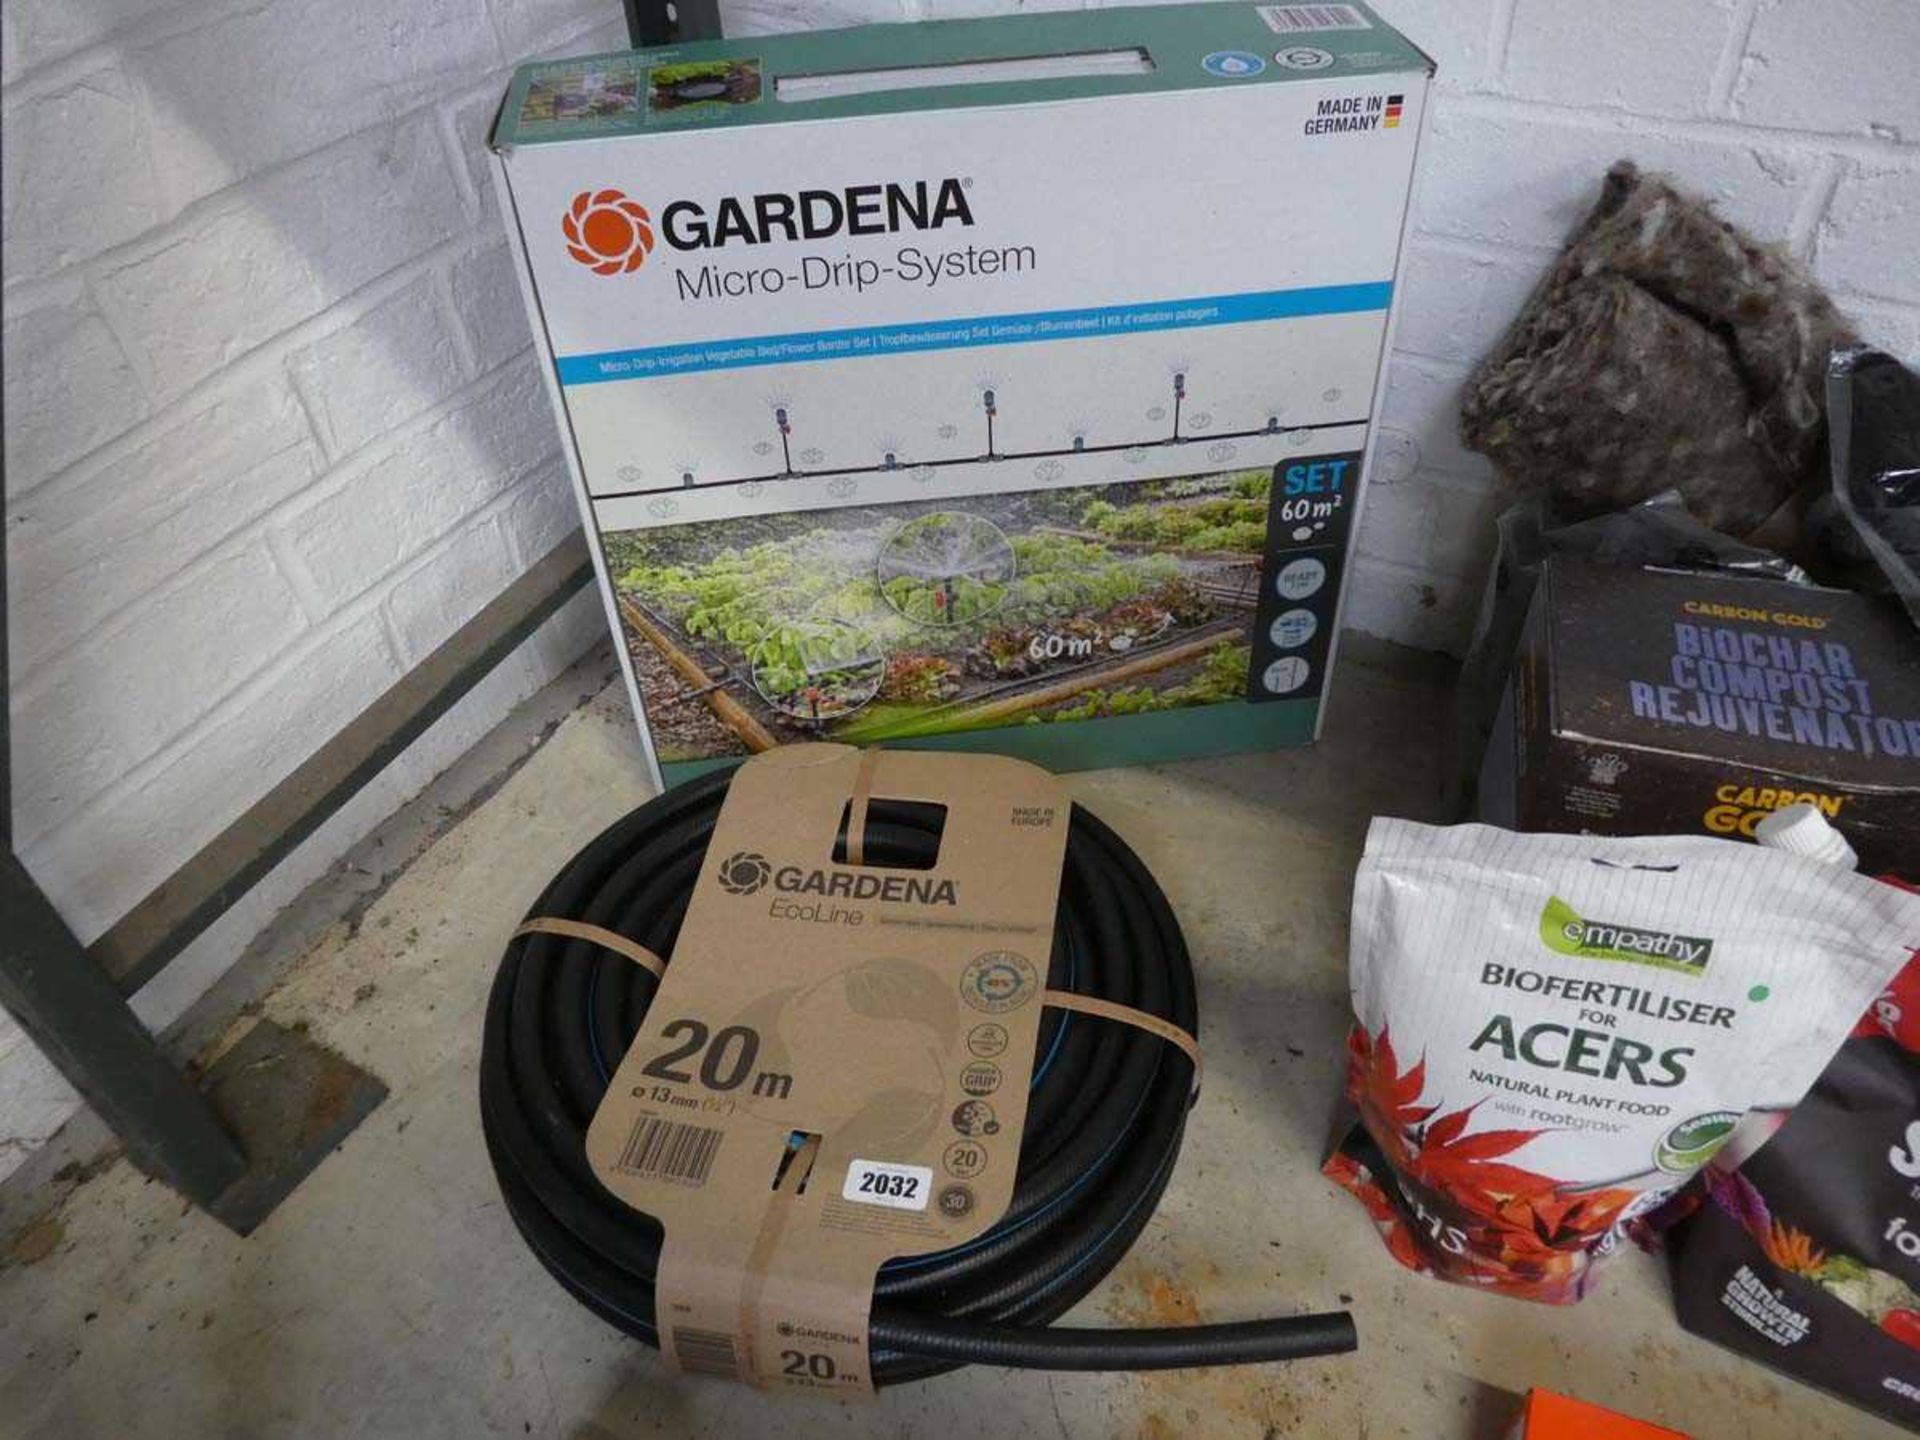 Boxed Gardena micro drip system, together with a Gardena 20m garden hose